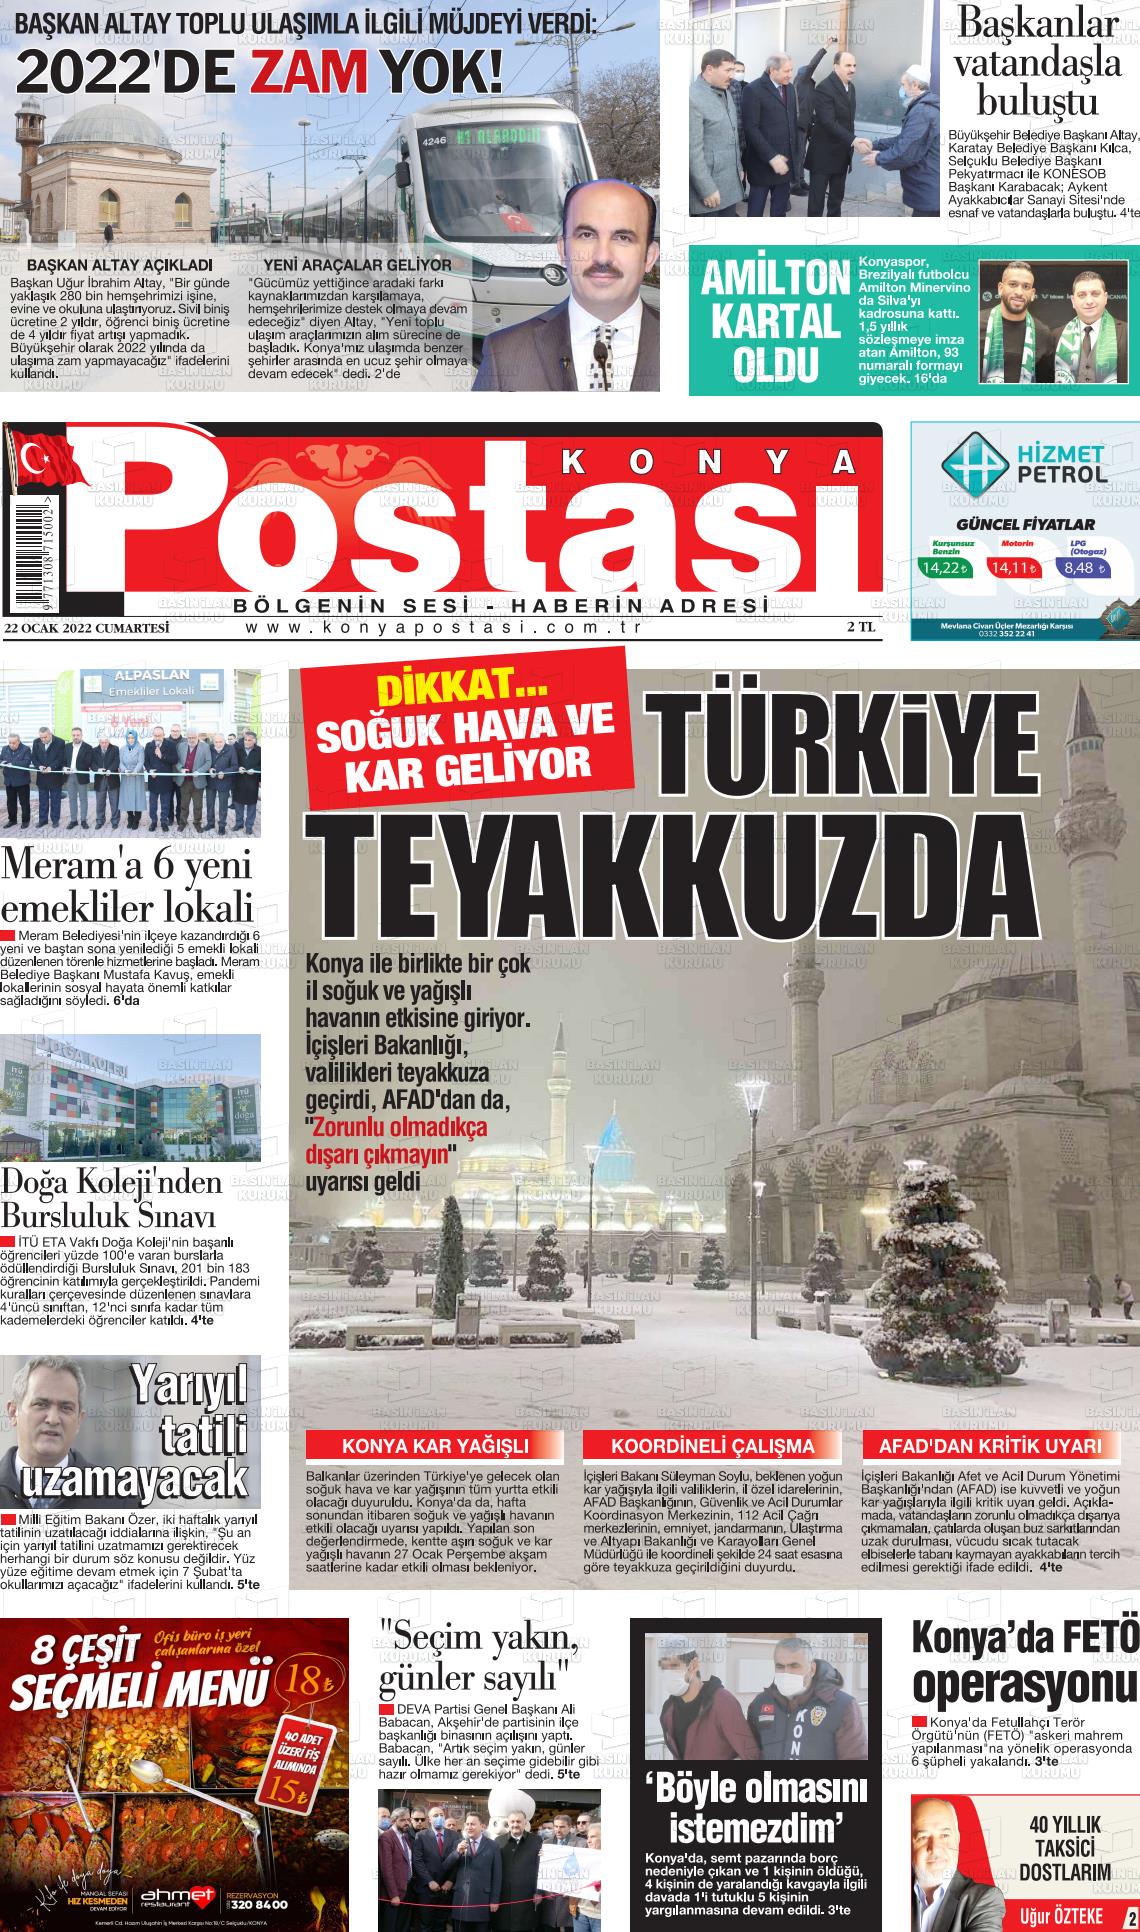 22 Ocak 2022 Konya Postası Gazete Manşeti